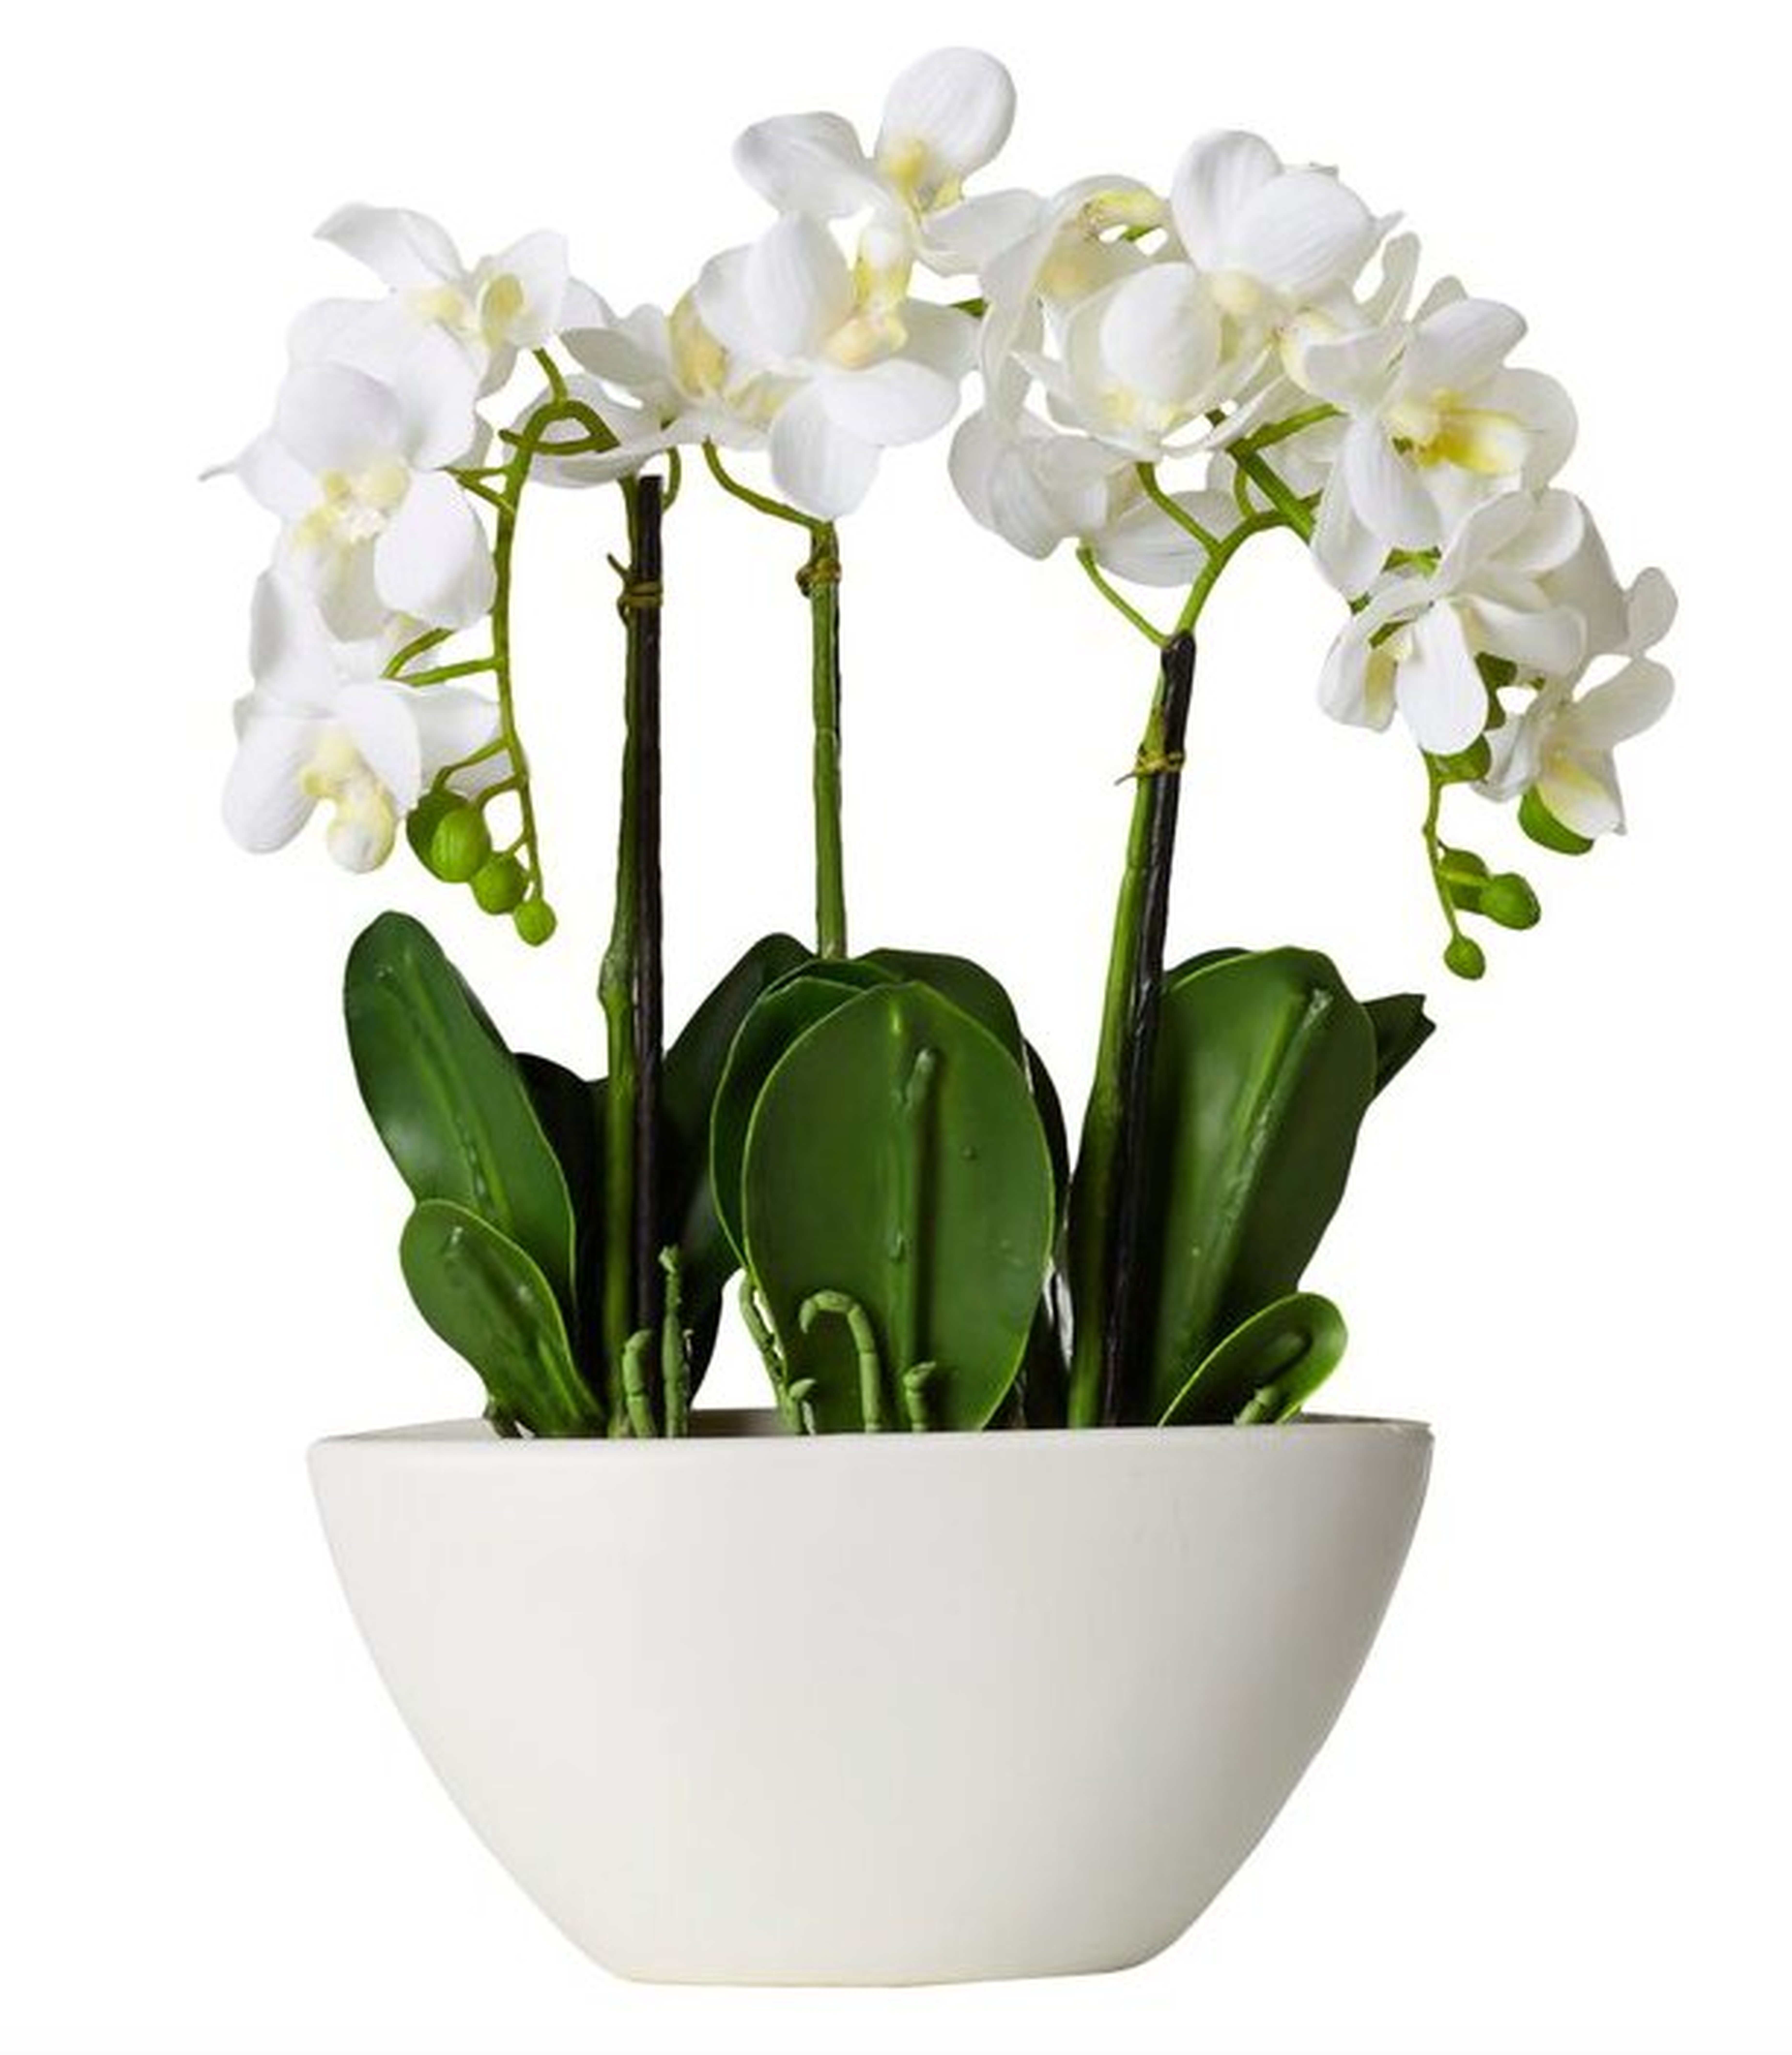 Orchid Centerpiece in Pot - Wayfair